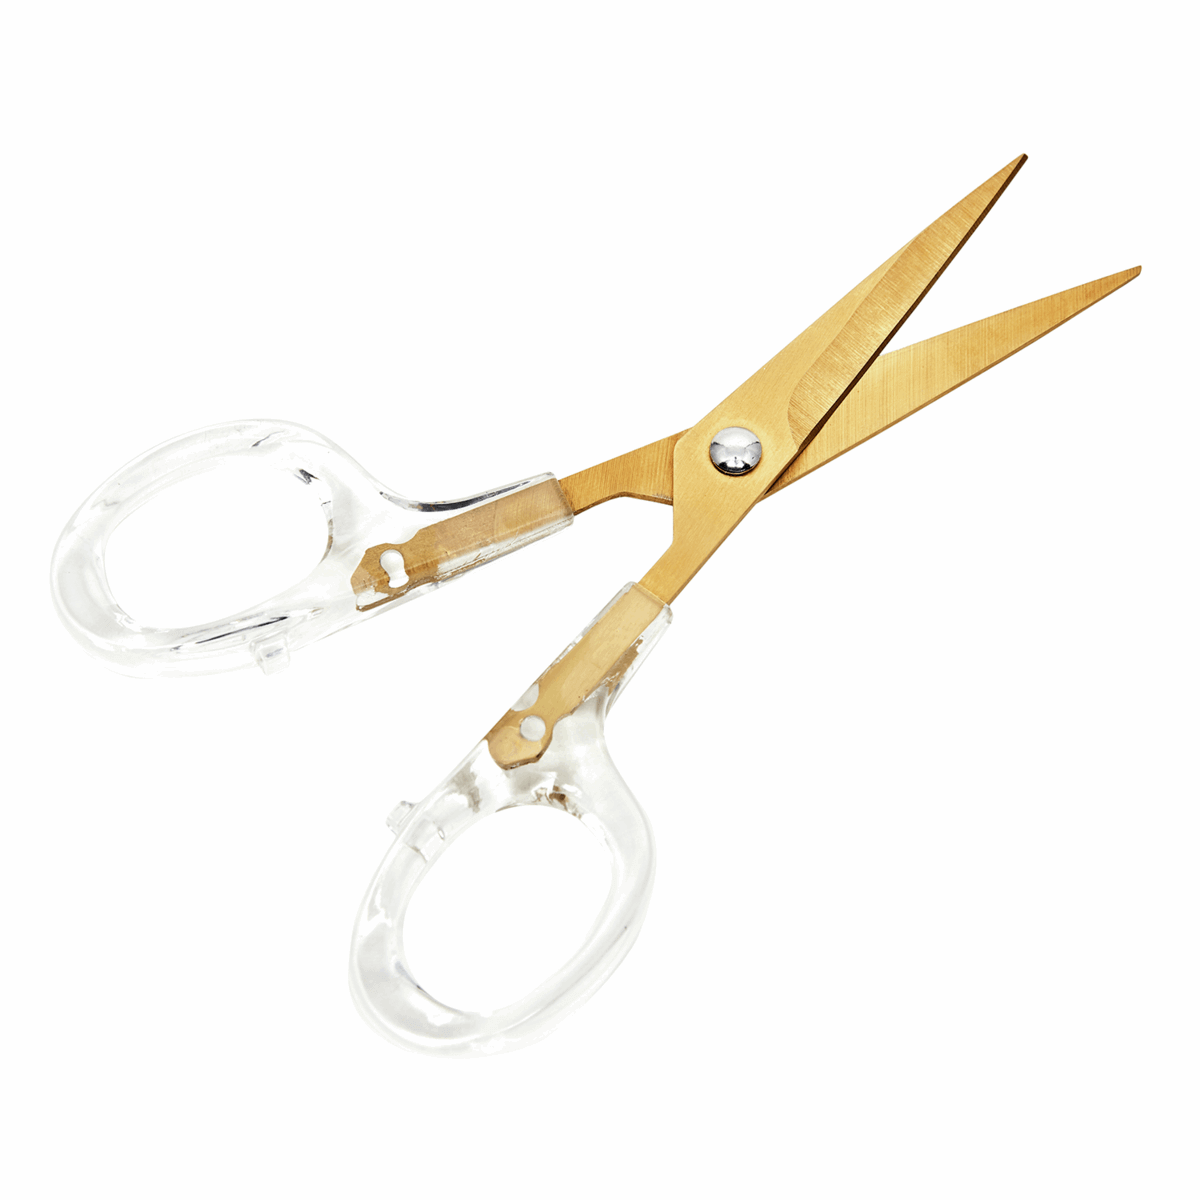 Hemline Gold Embroidery scissors: dot. fine points, needlework. 5 inches/12.5 cm